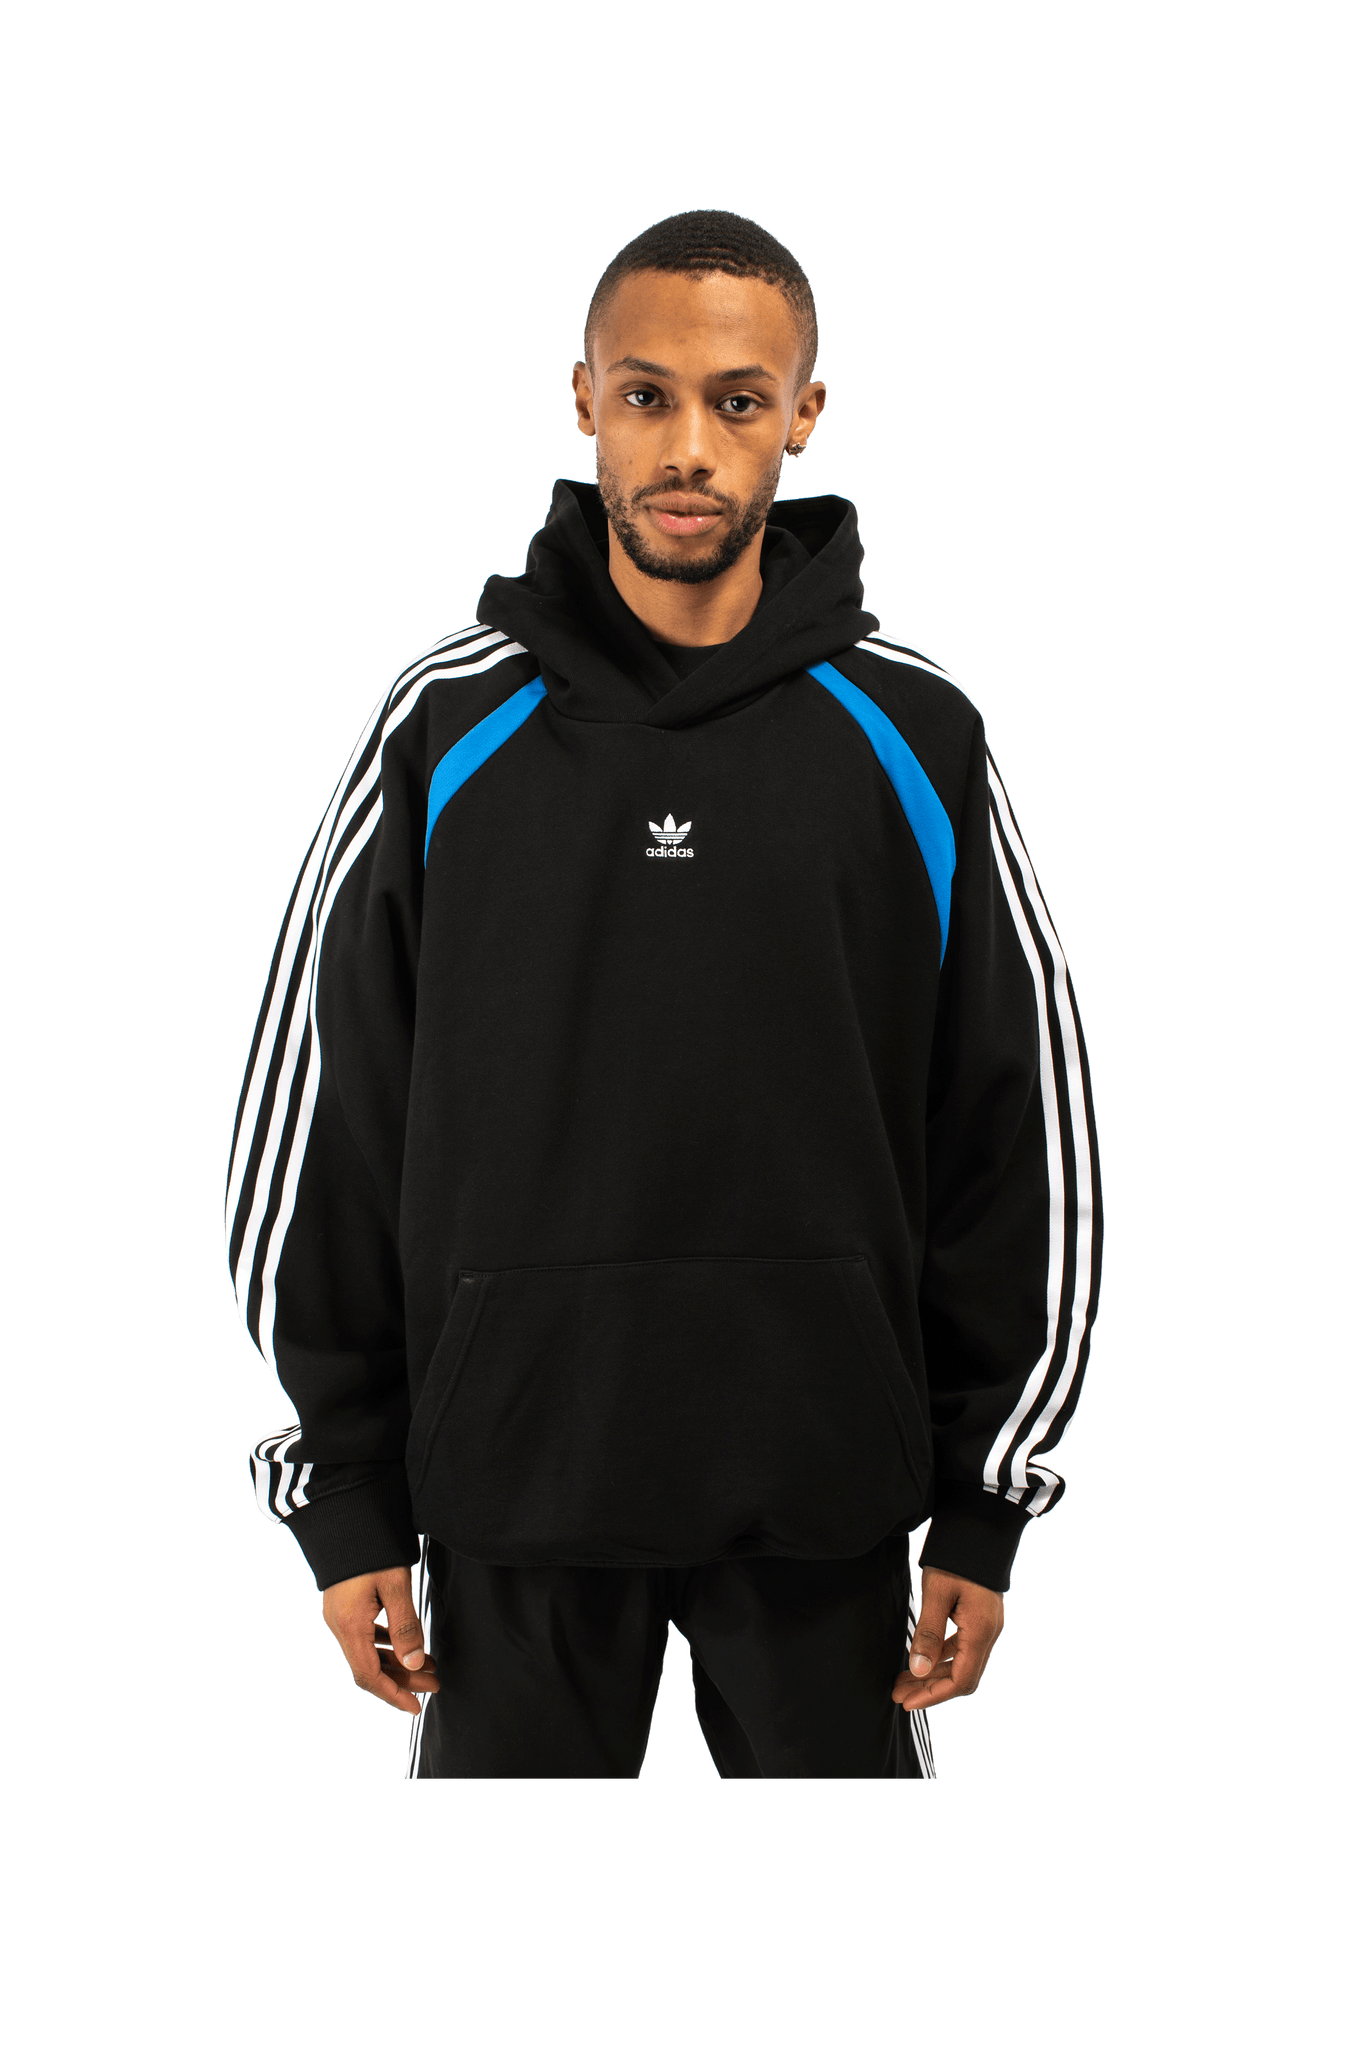 Adidas Originals | One Block Down selection